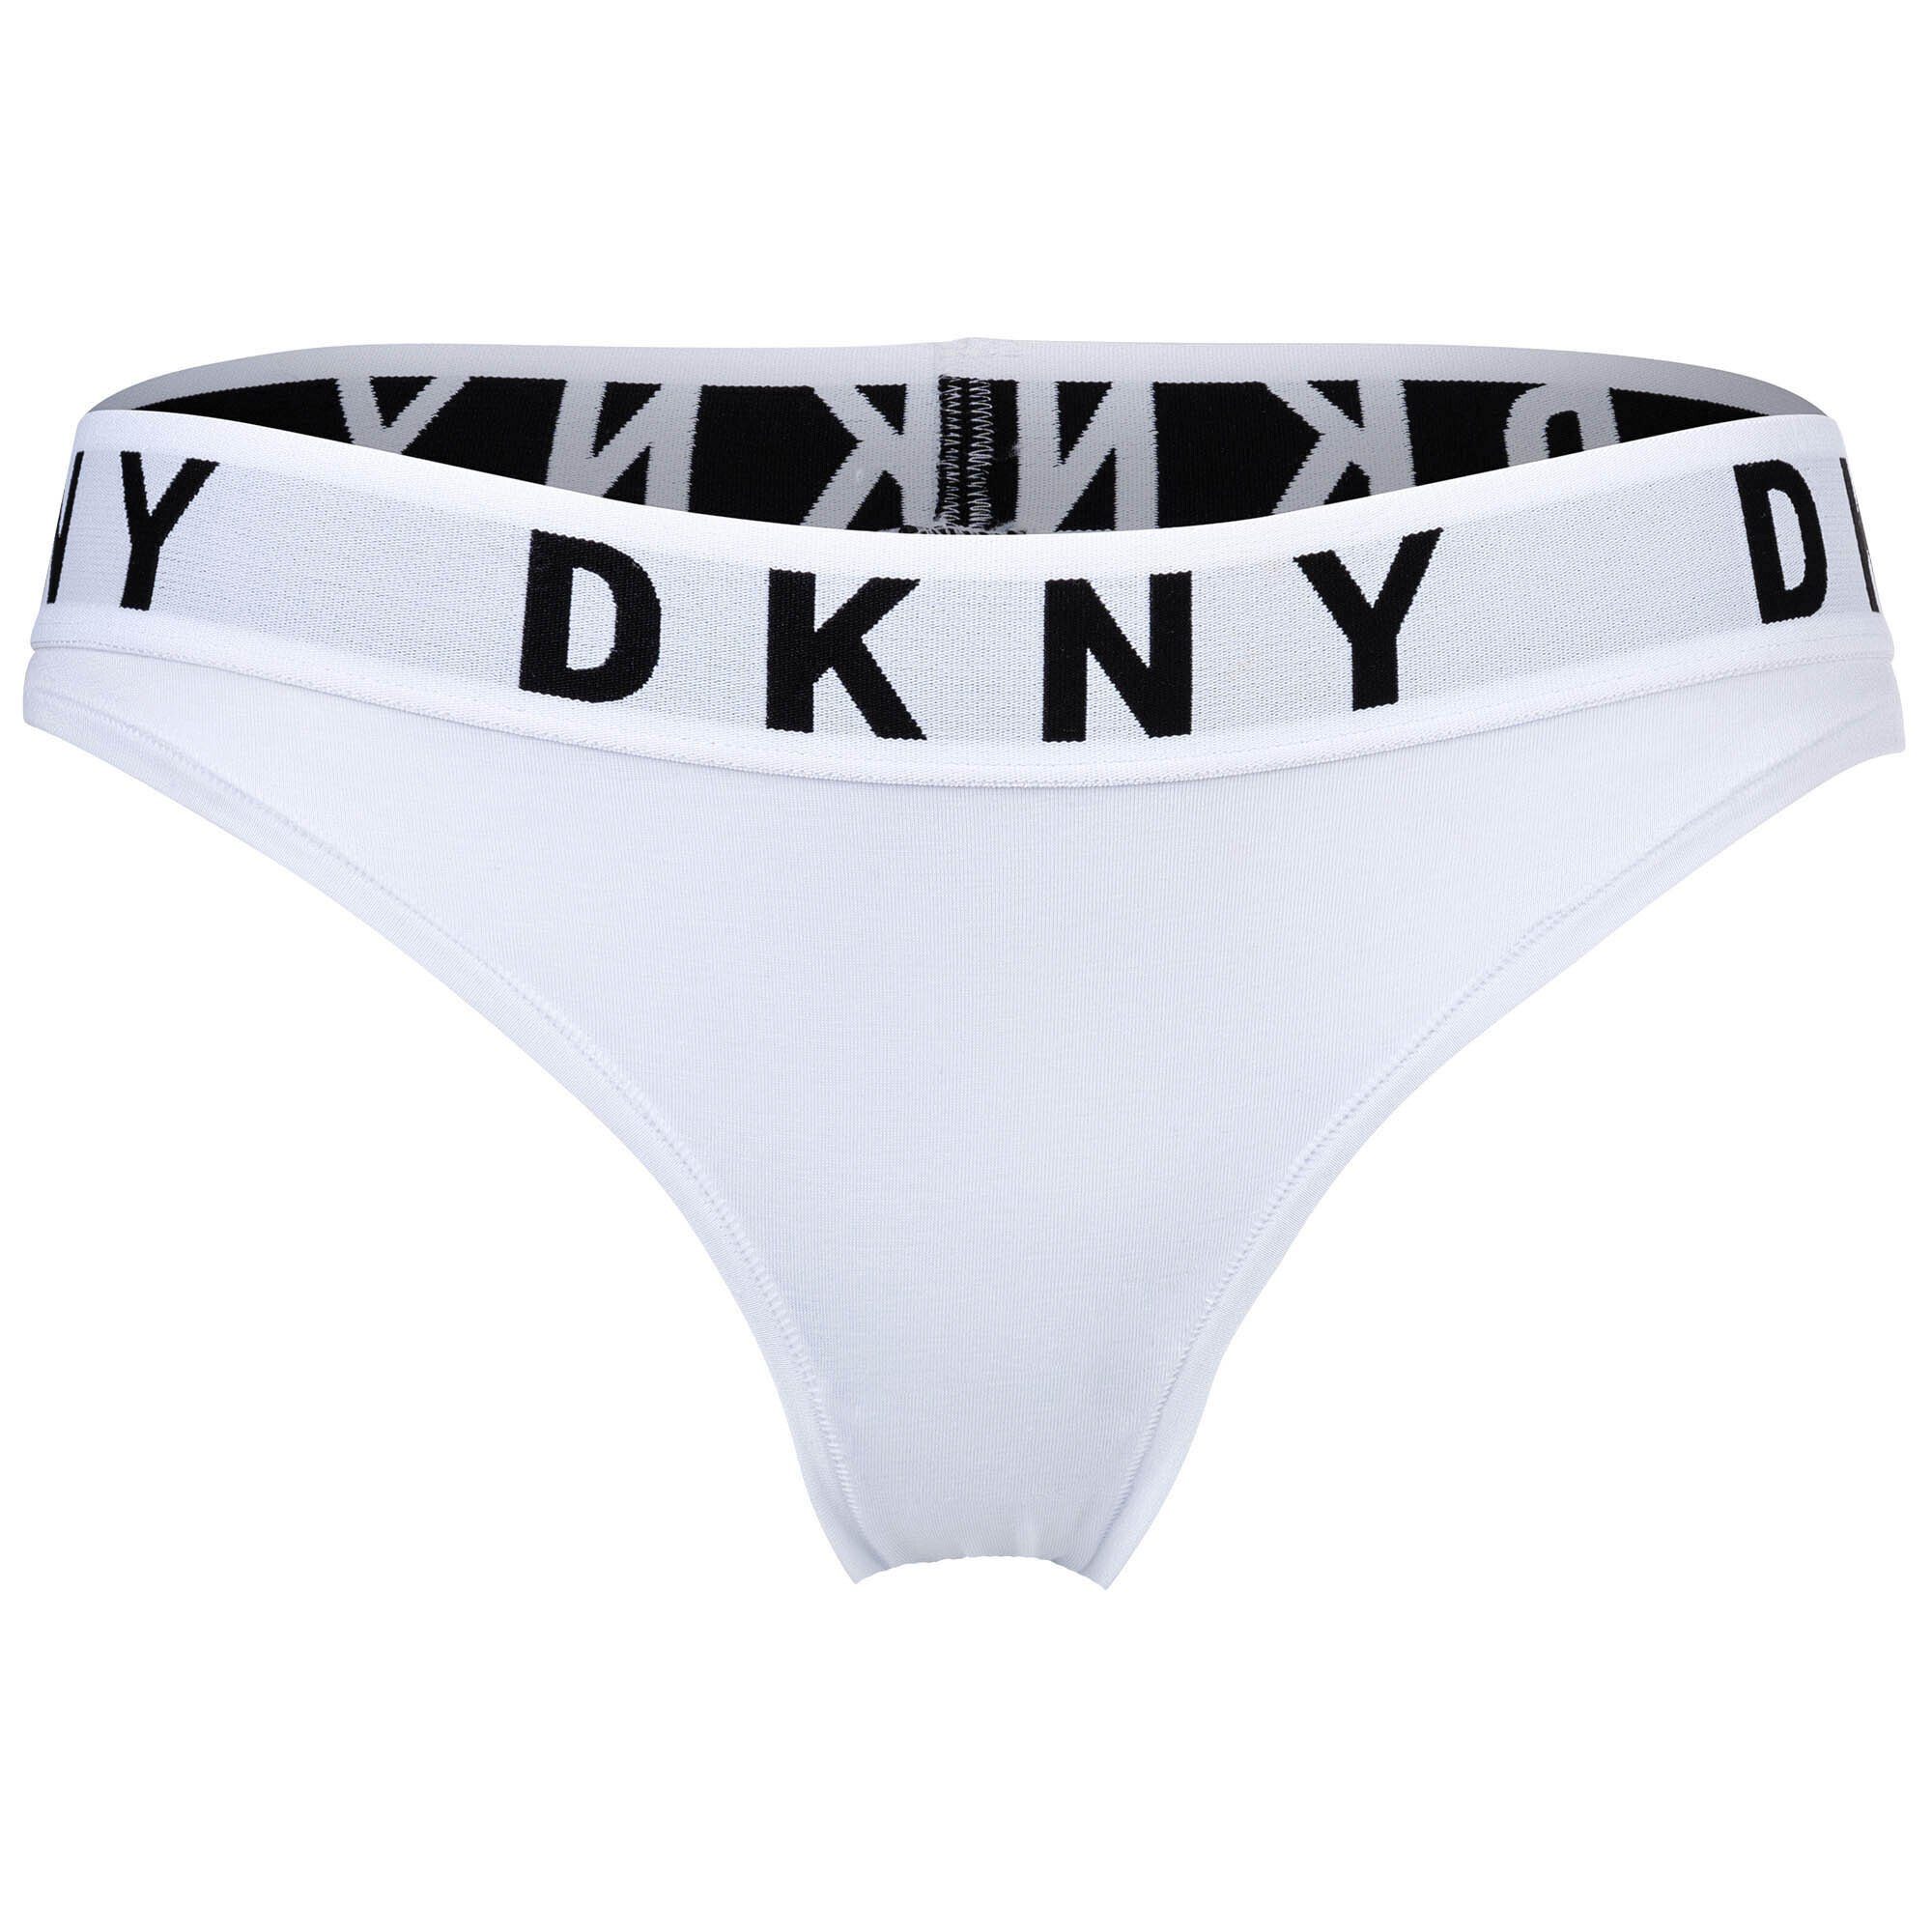 DKNY Panty Damen Slip - Brief, Cotton Modal Stretch Weiß